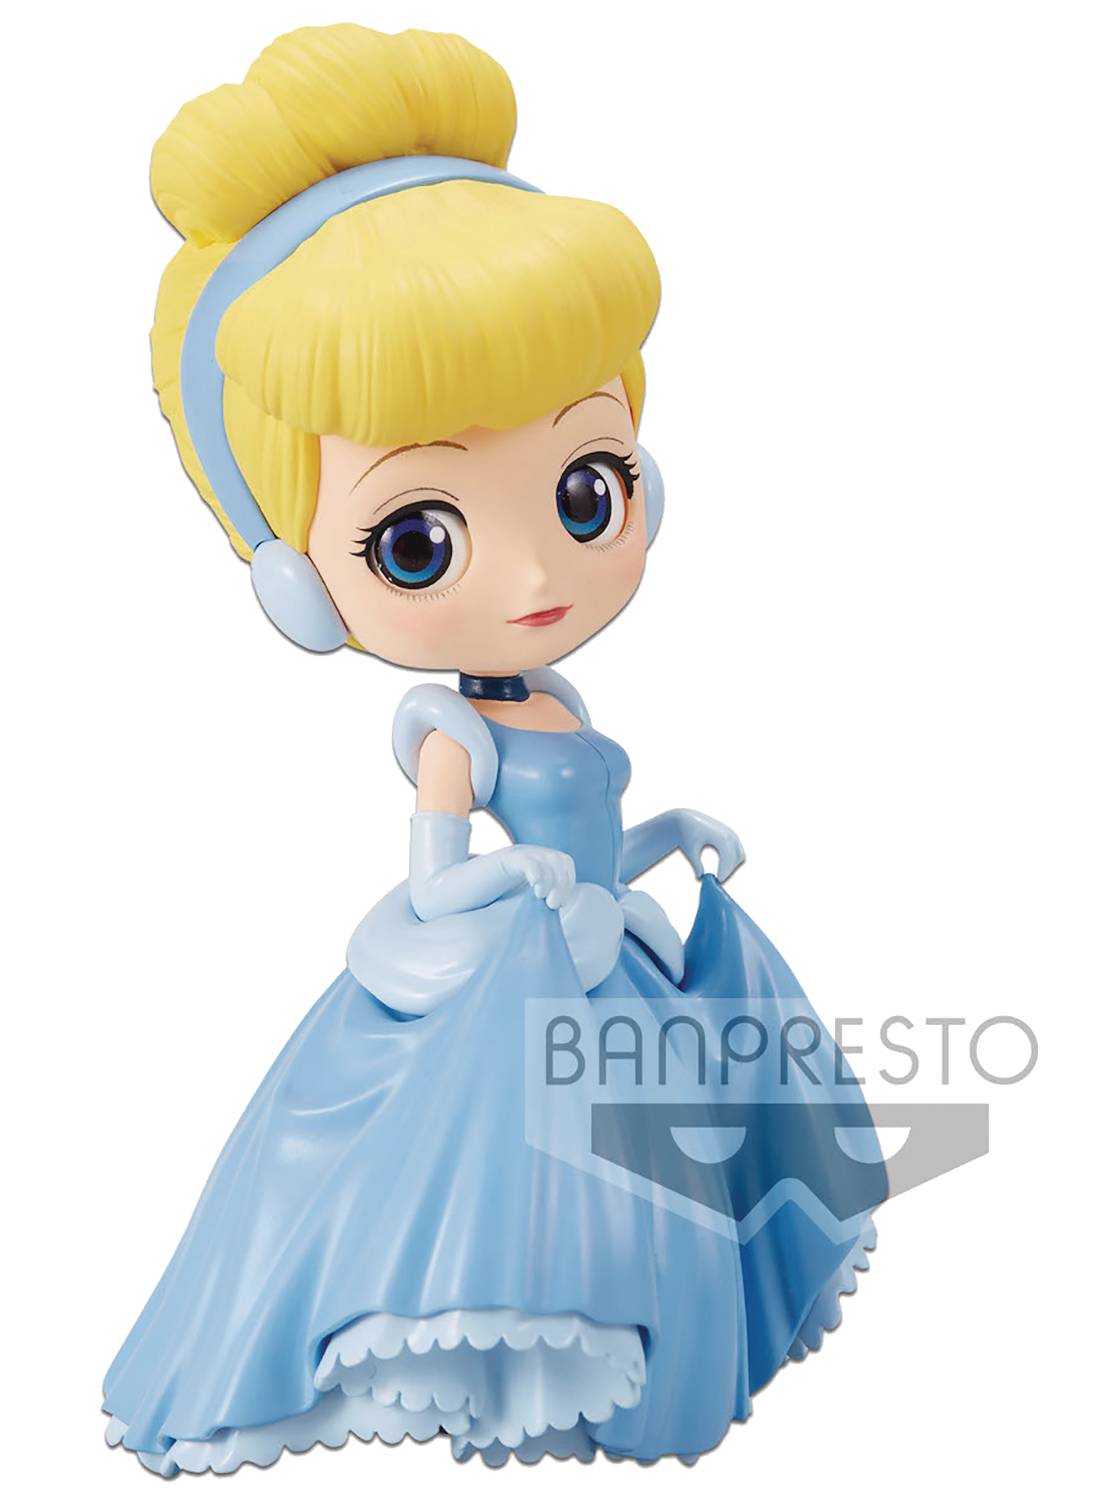 Banpresto Disney Cinderella Q-Posket Figure